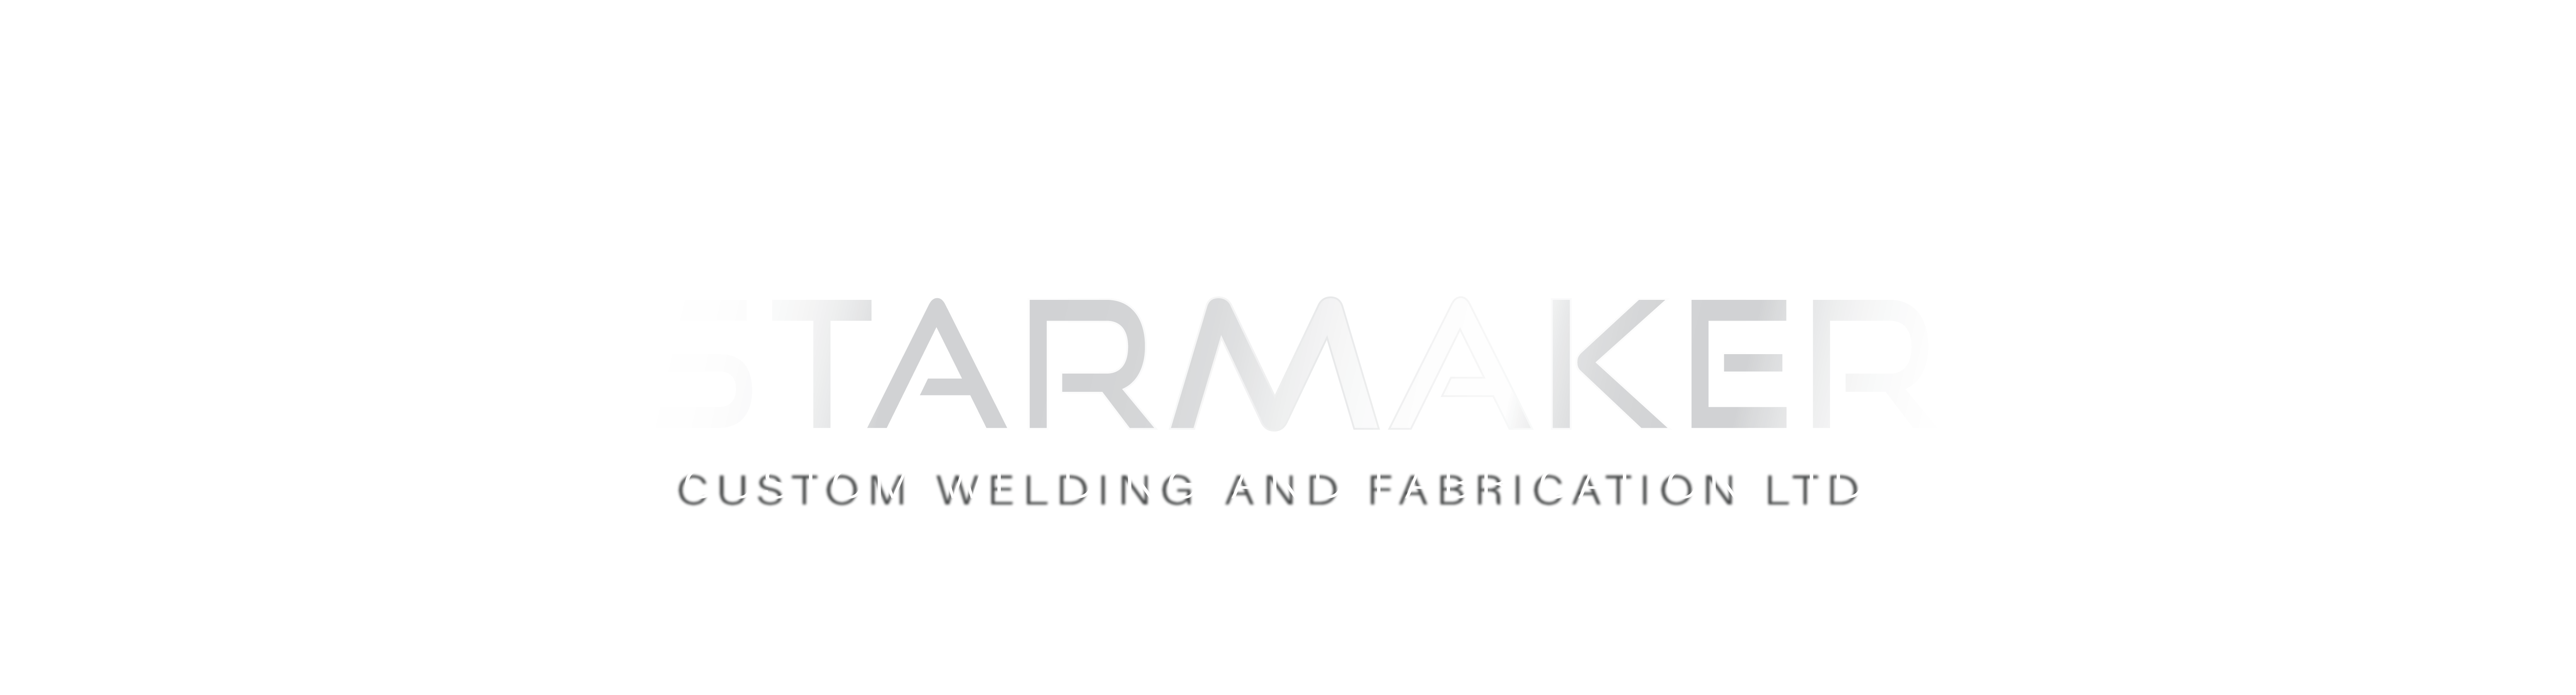 Starmaker Custom Welding and Fabrication Ltd.